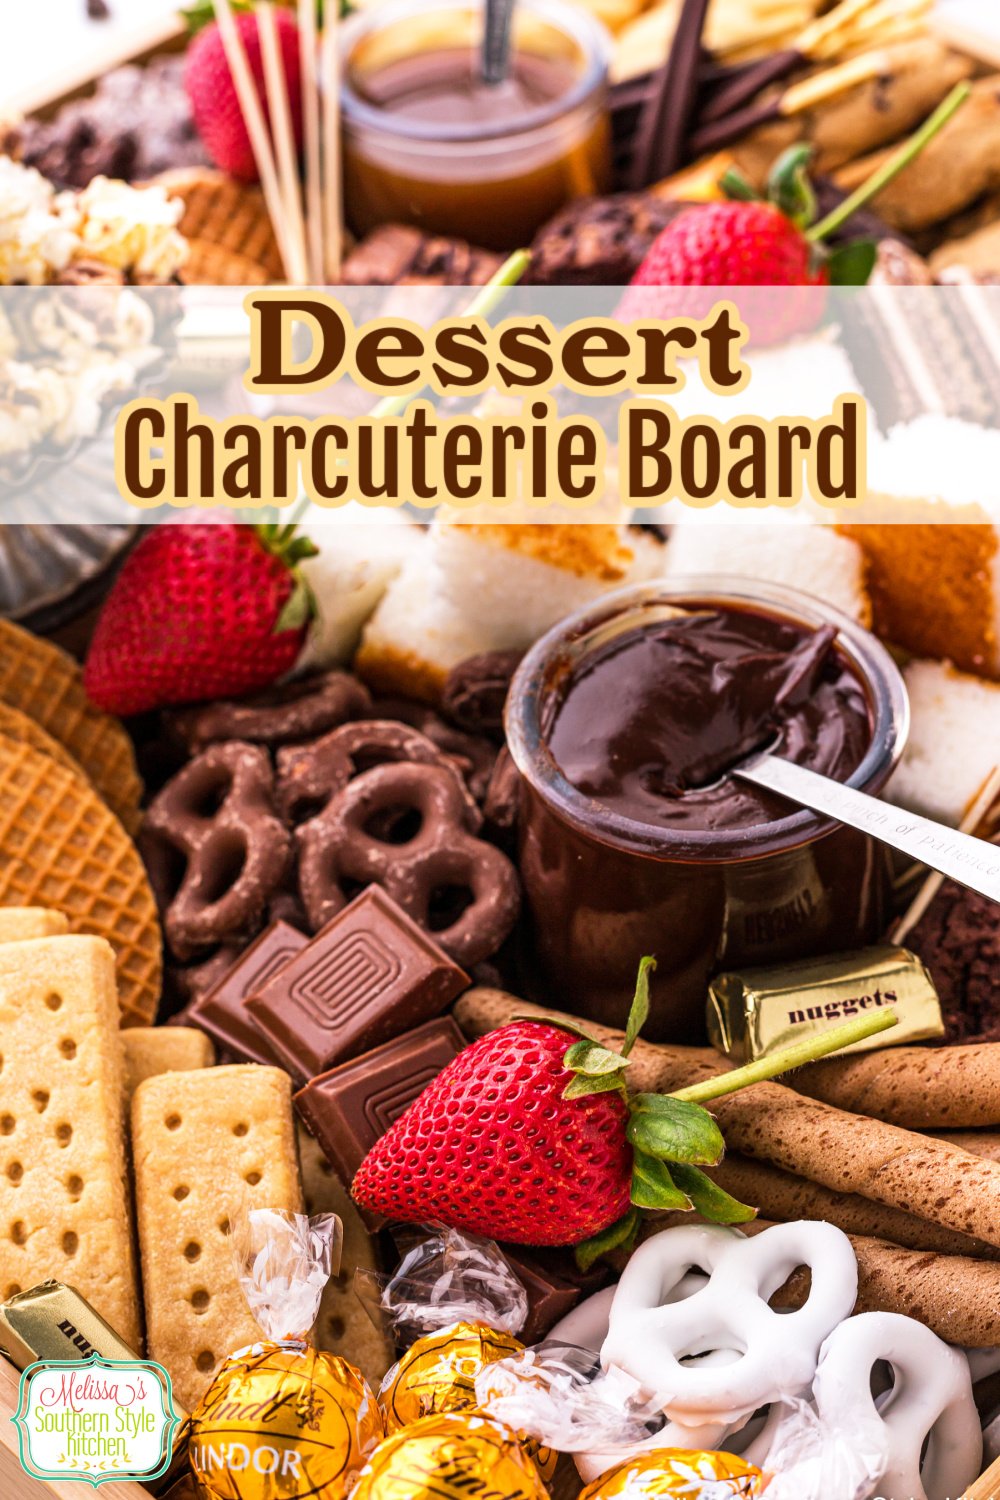 dessert-charcuterie-board-recipe via @melissasssk